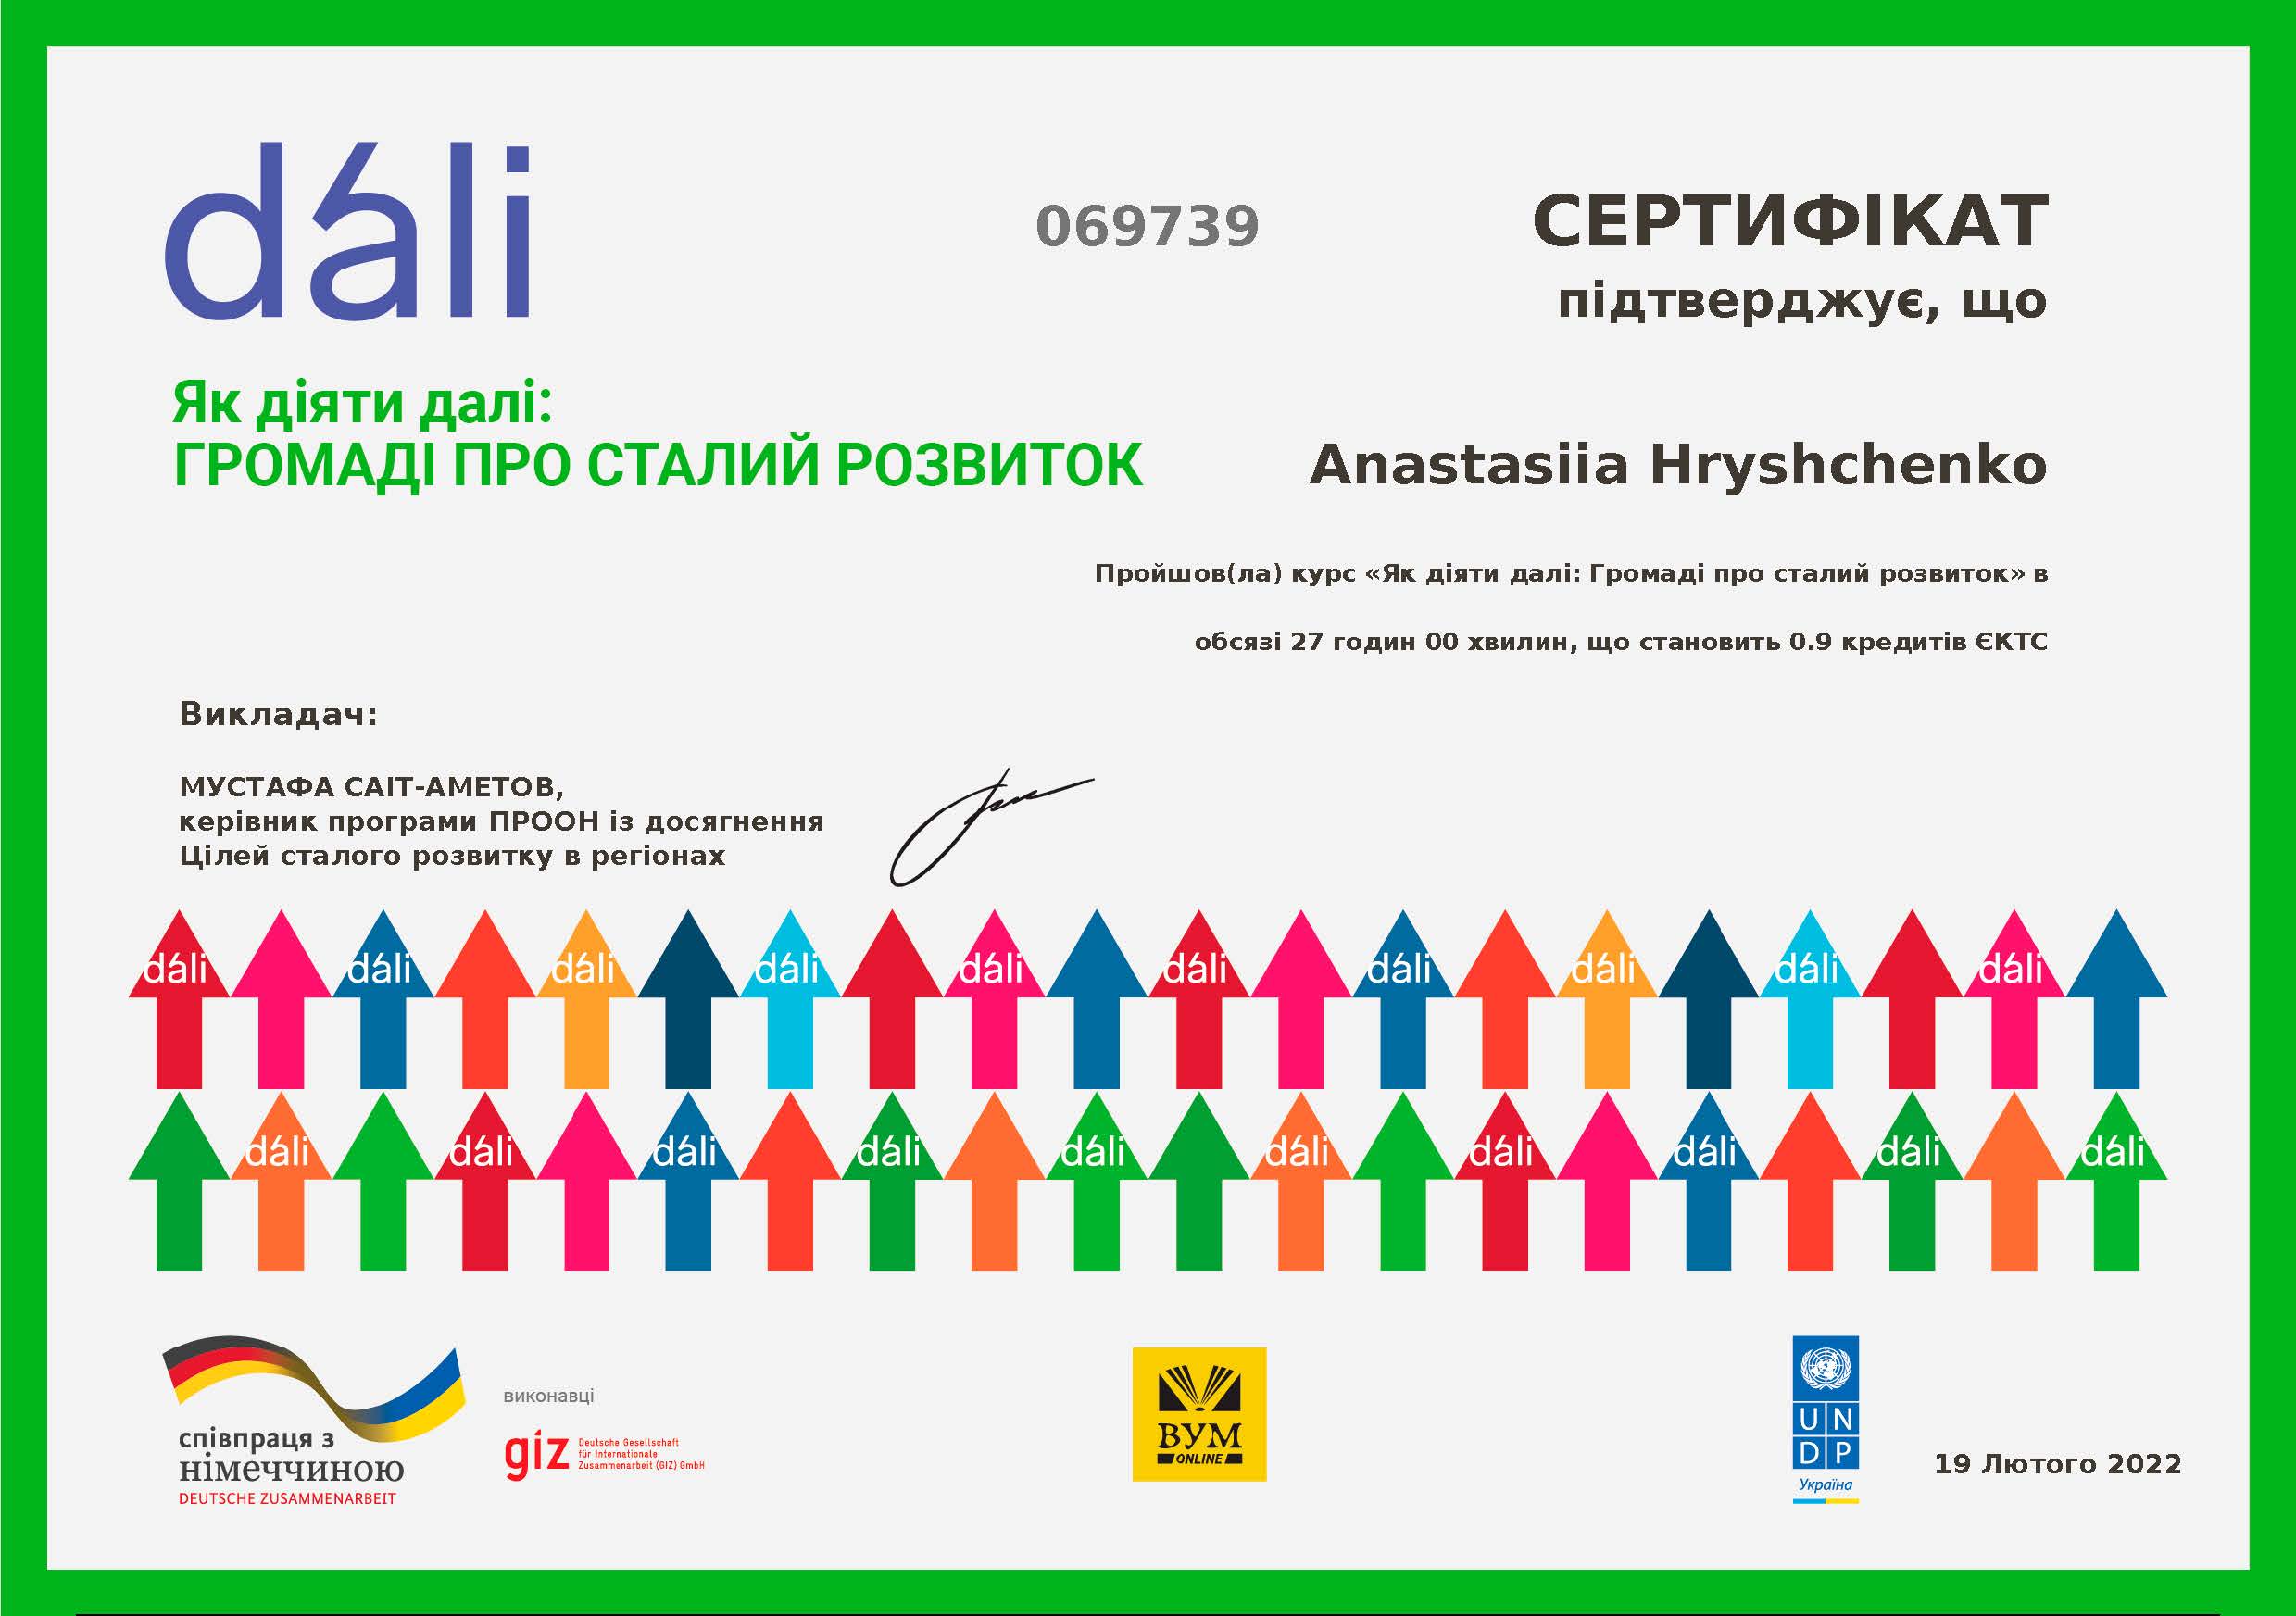 Грищенко ЕКО18 certificate 1